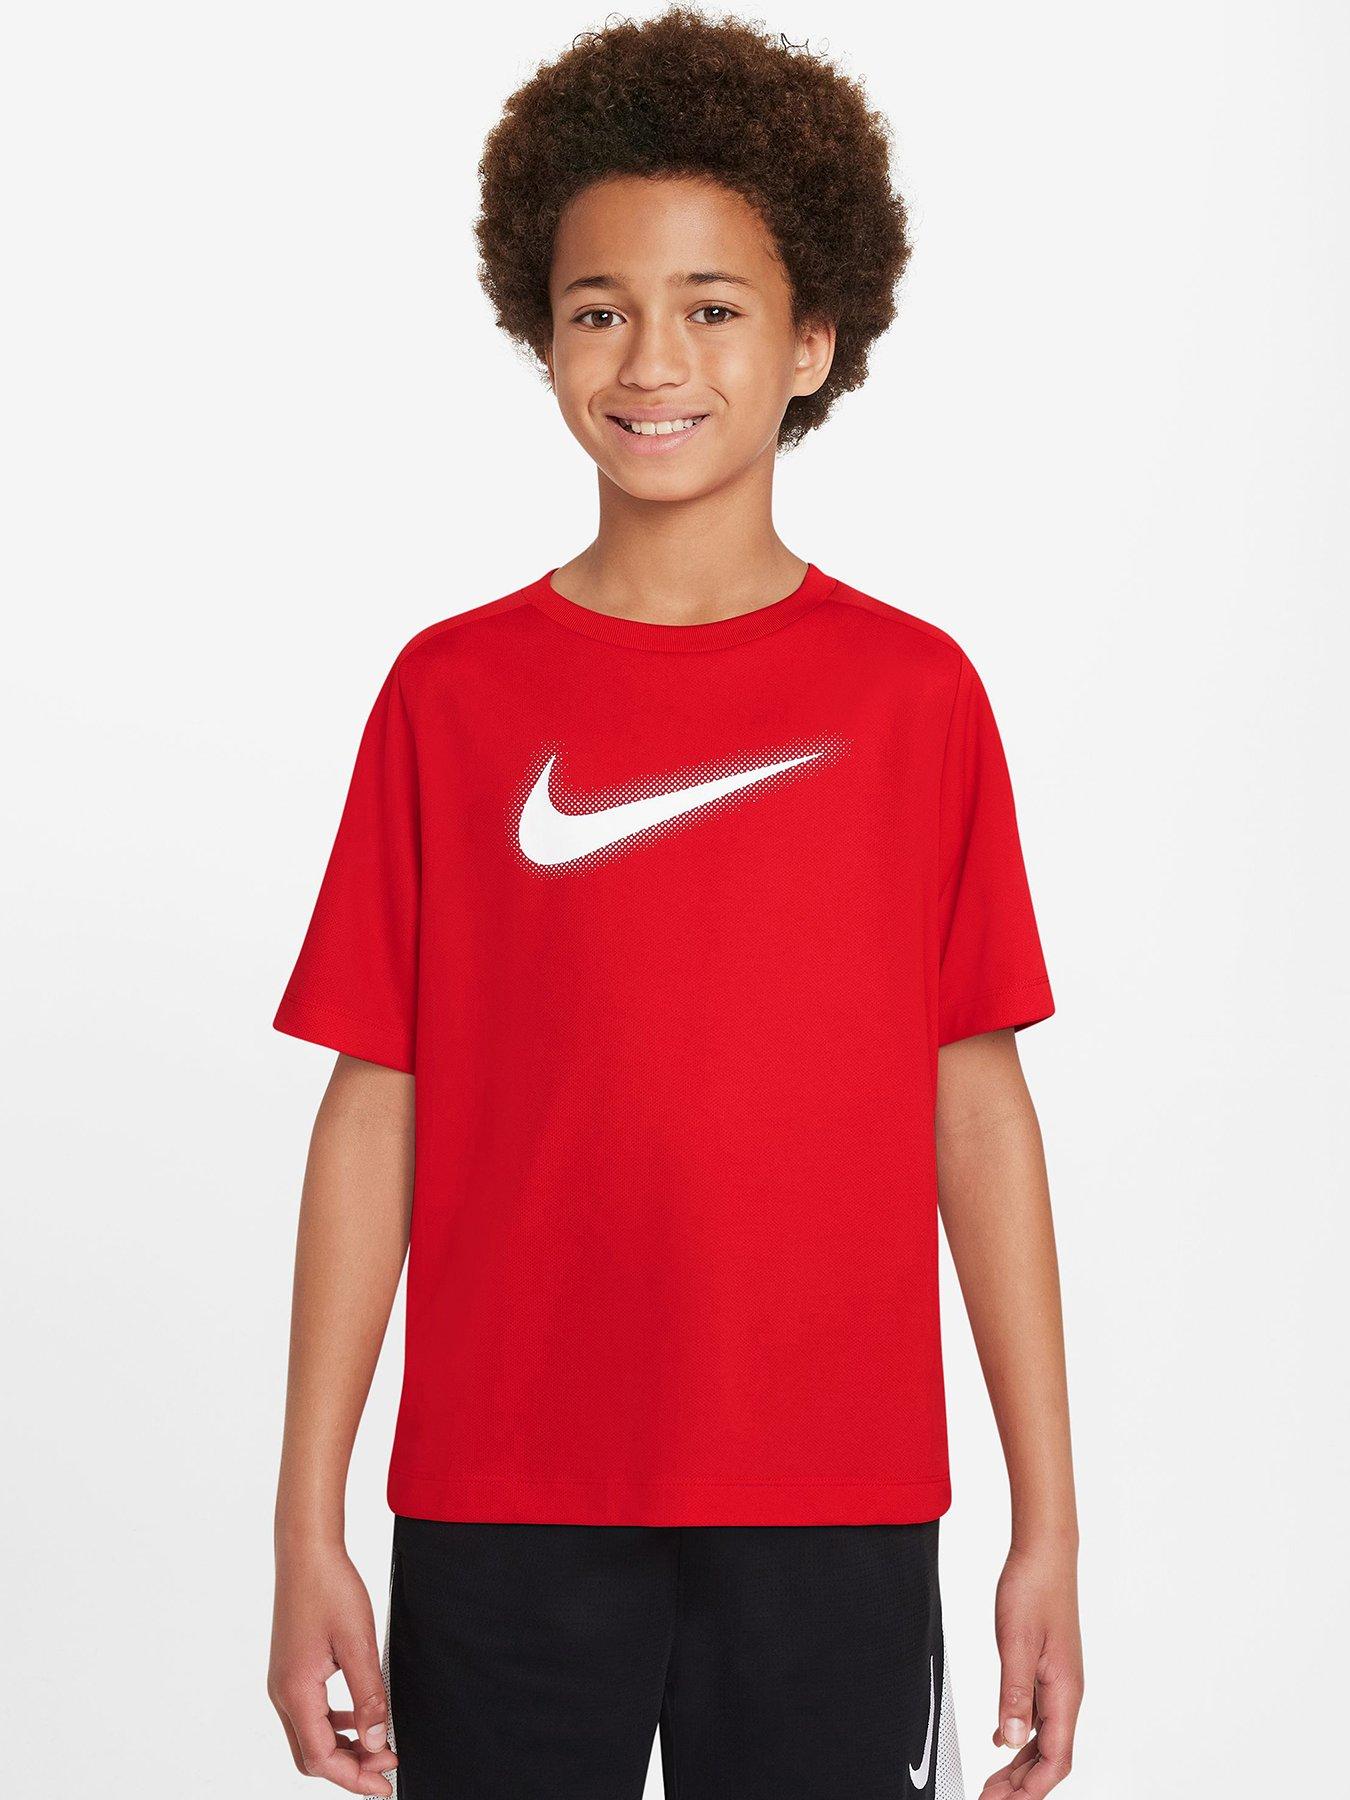 Red | & Nike Child baby 